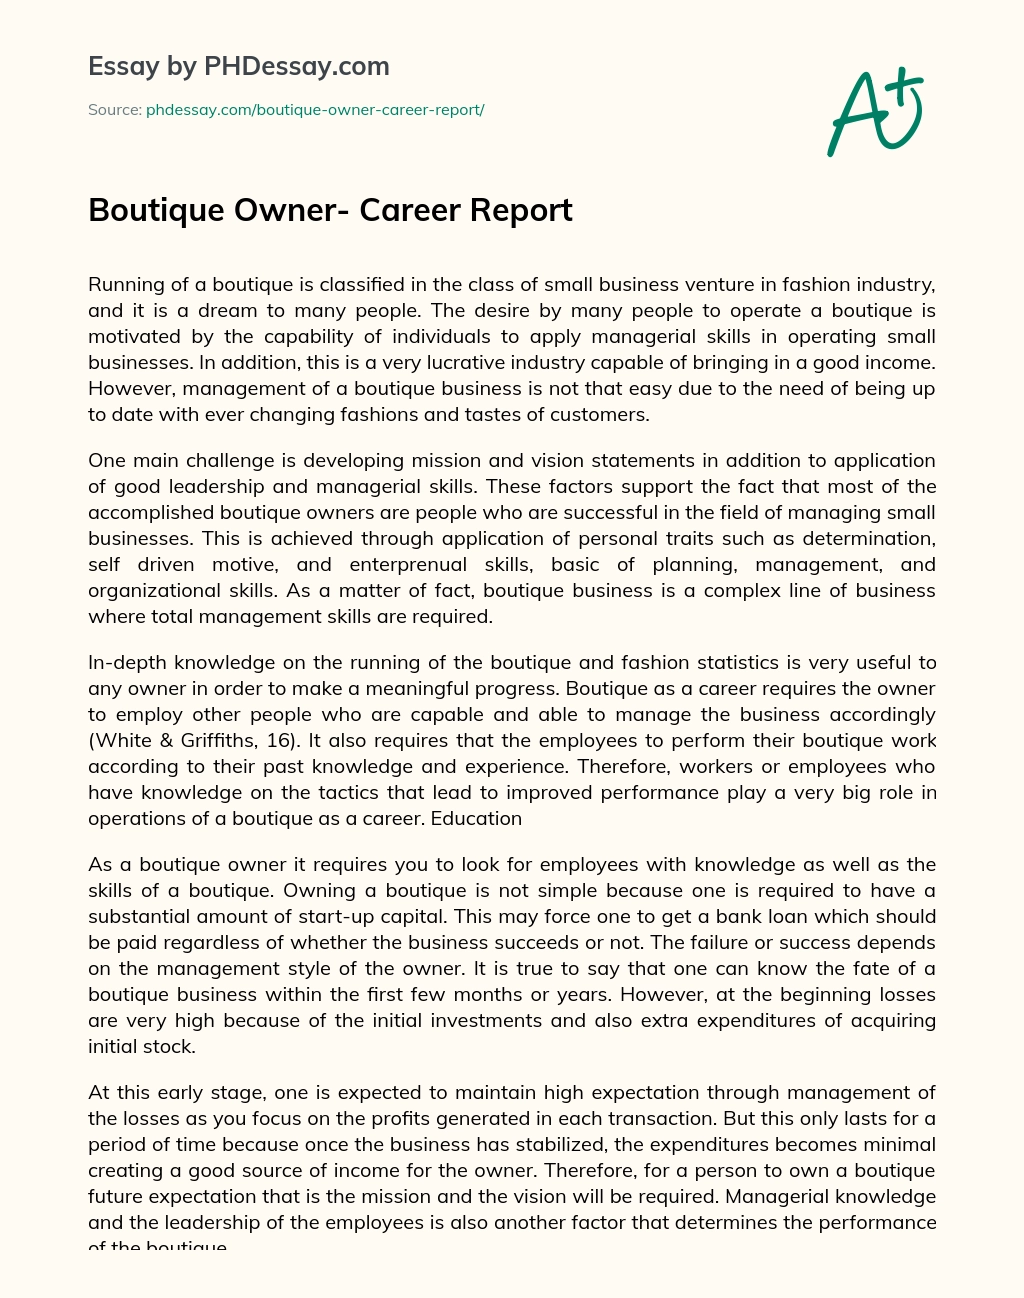 Boutique Owner- Career Report essay